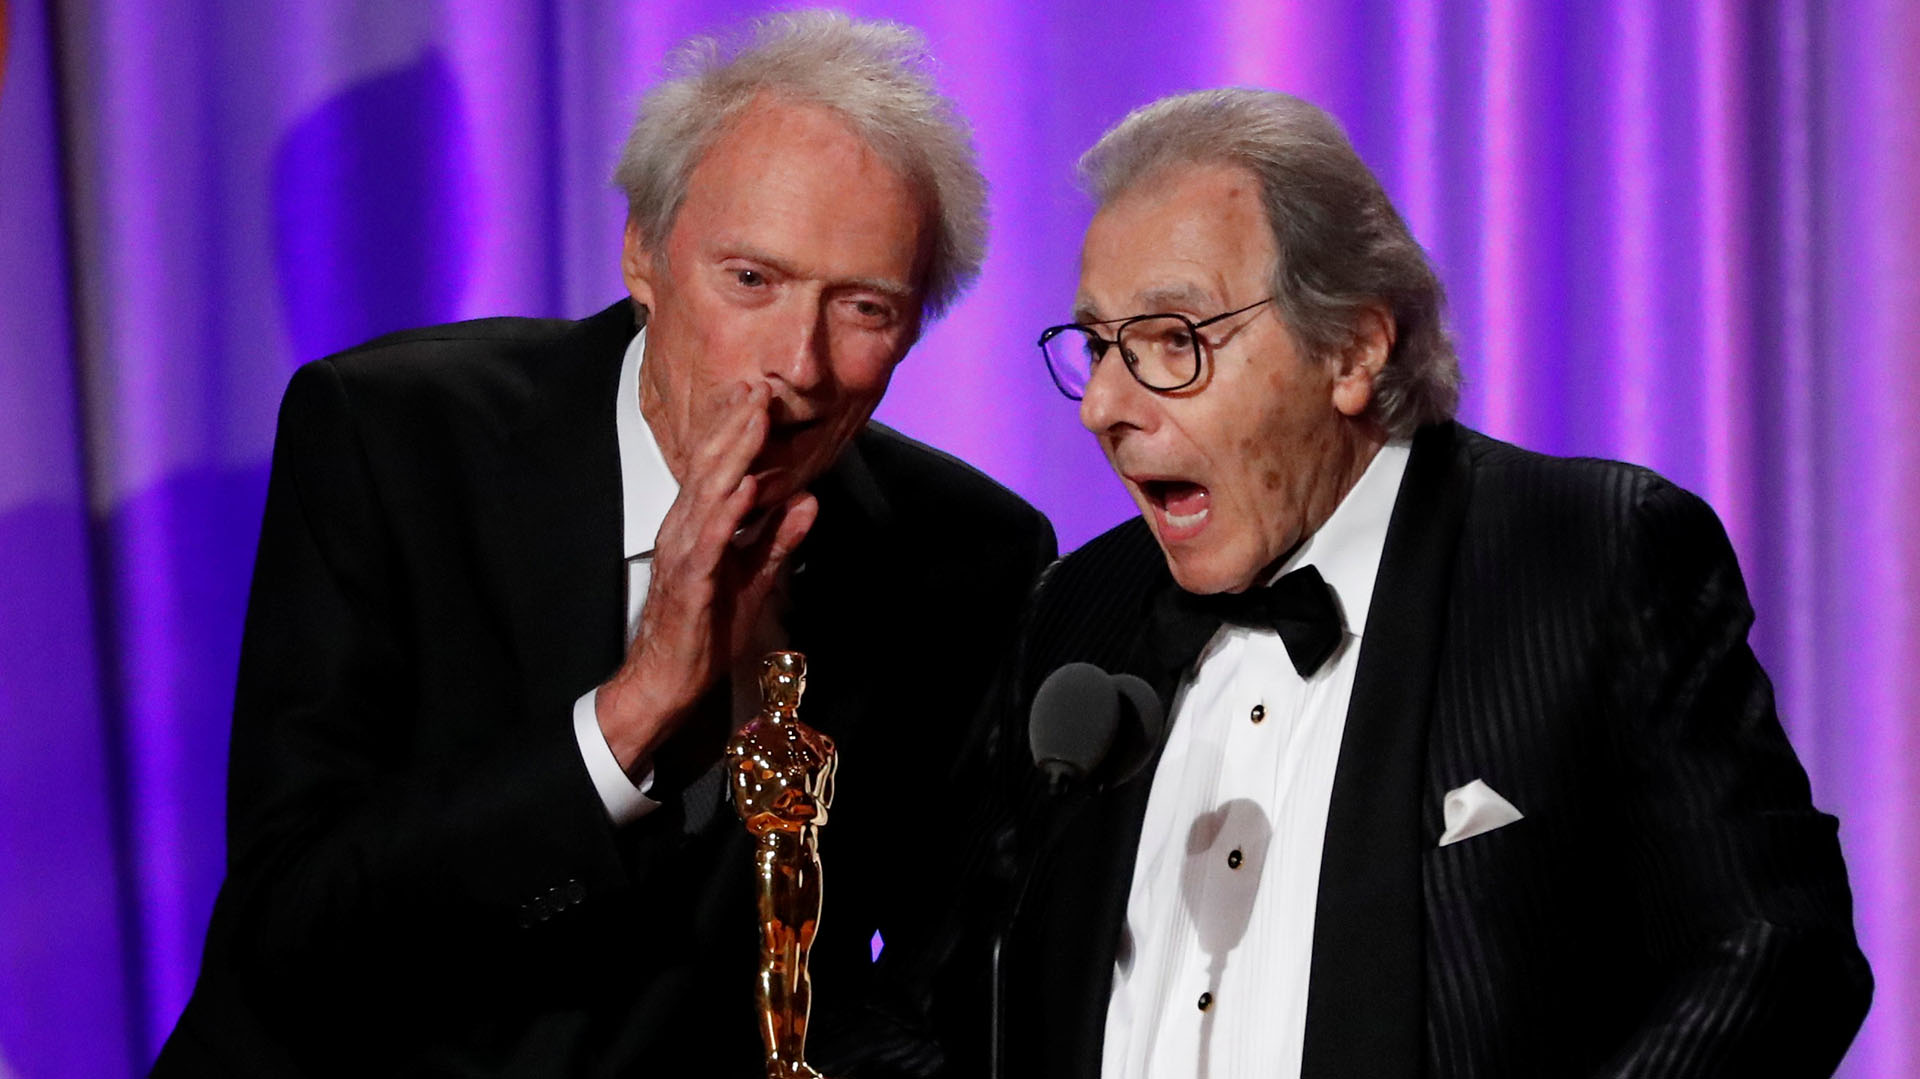 Schifrin recibió el Oscar de manos de Clint Eastwood: "¡Misión cumplida!"